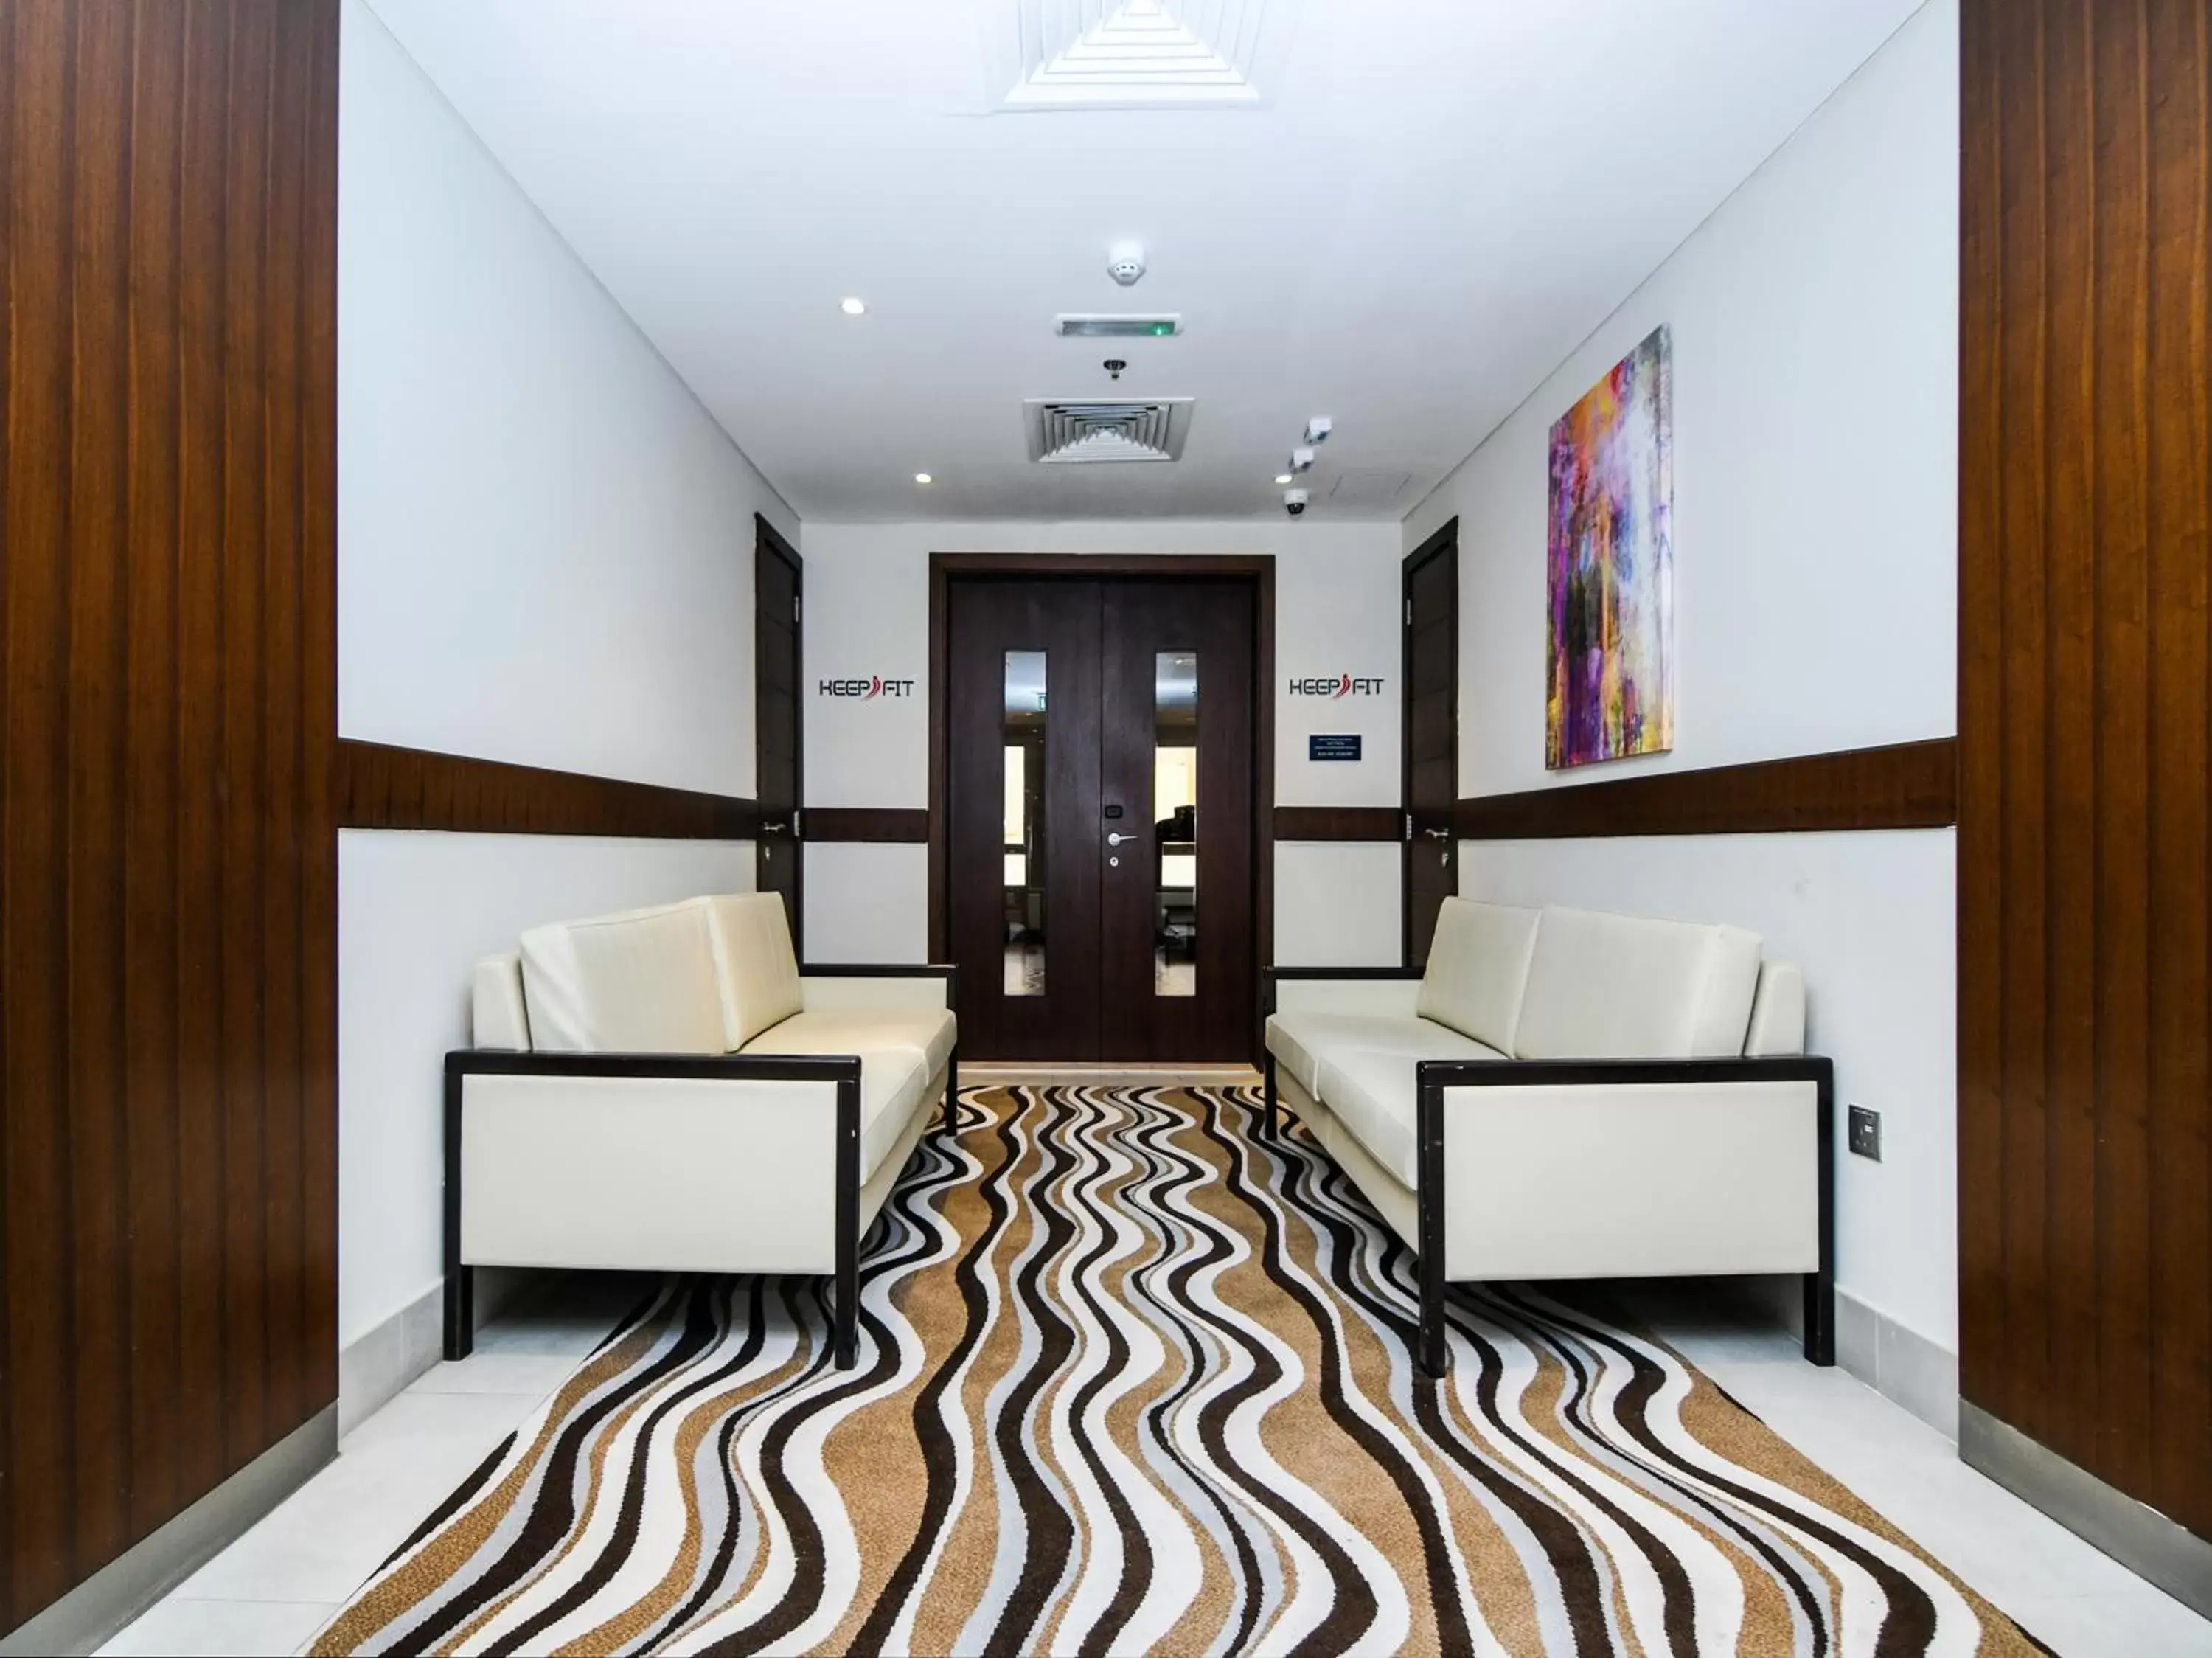 Lobby or reception in Action Hotel Ras Al Khaimah